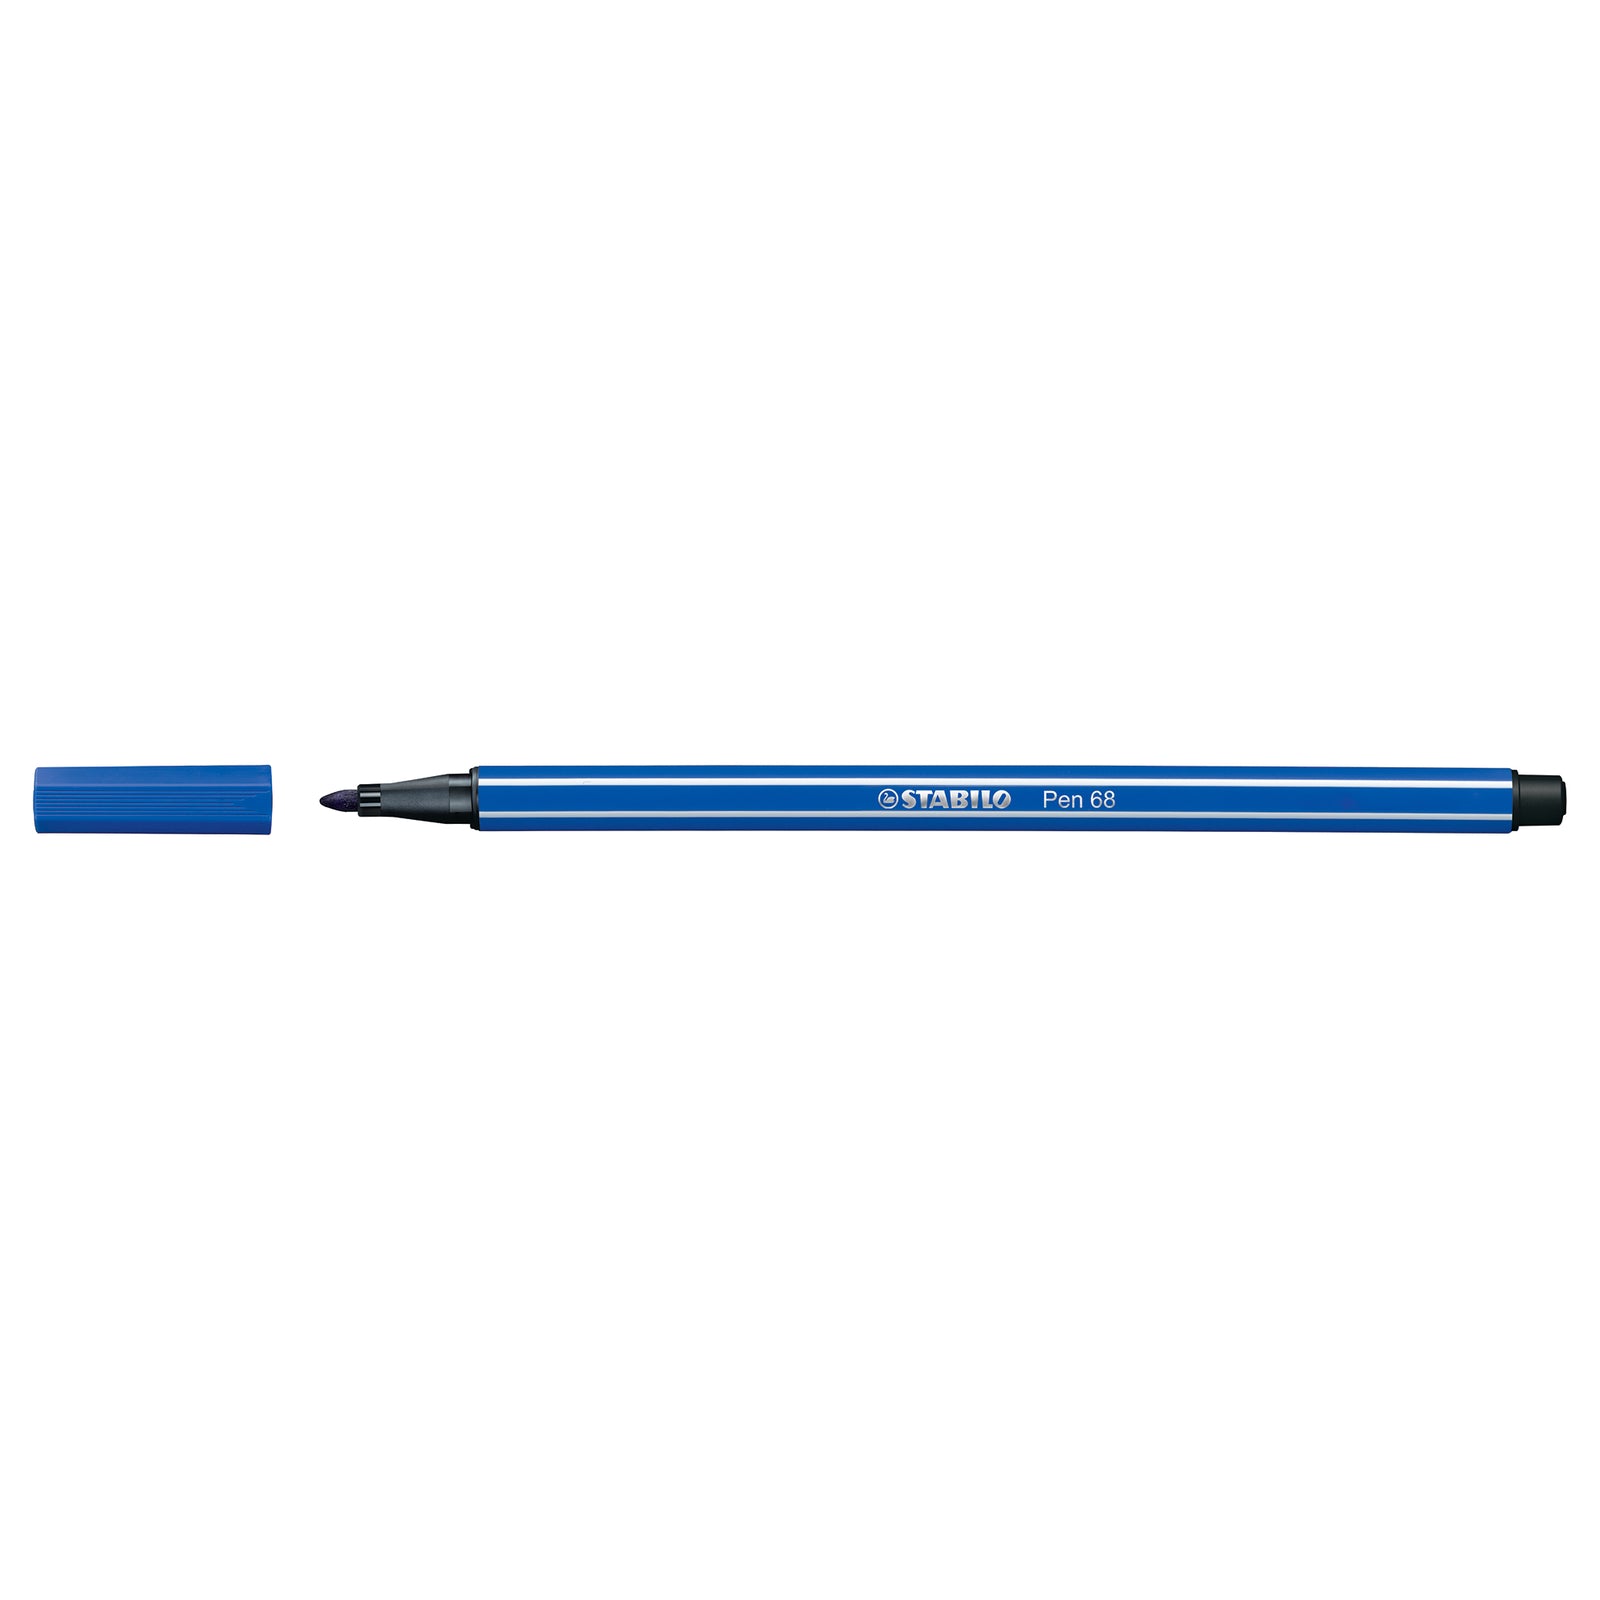 Stabilo Pen 68 Ultramarine